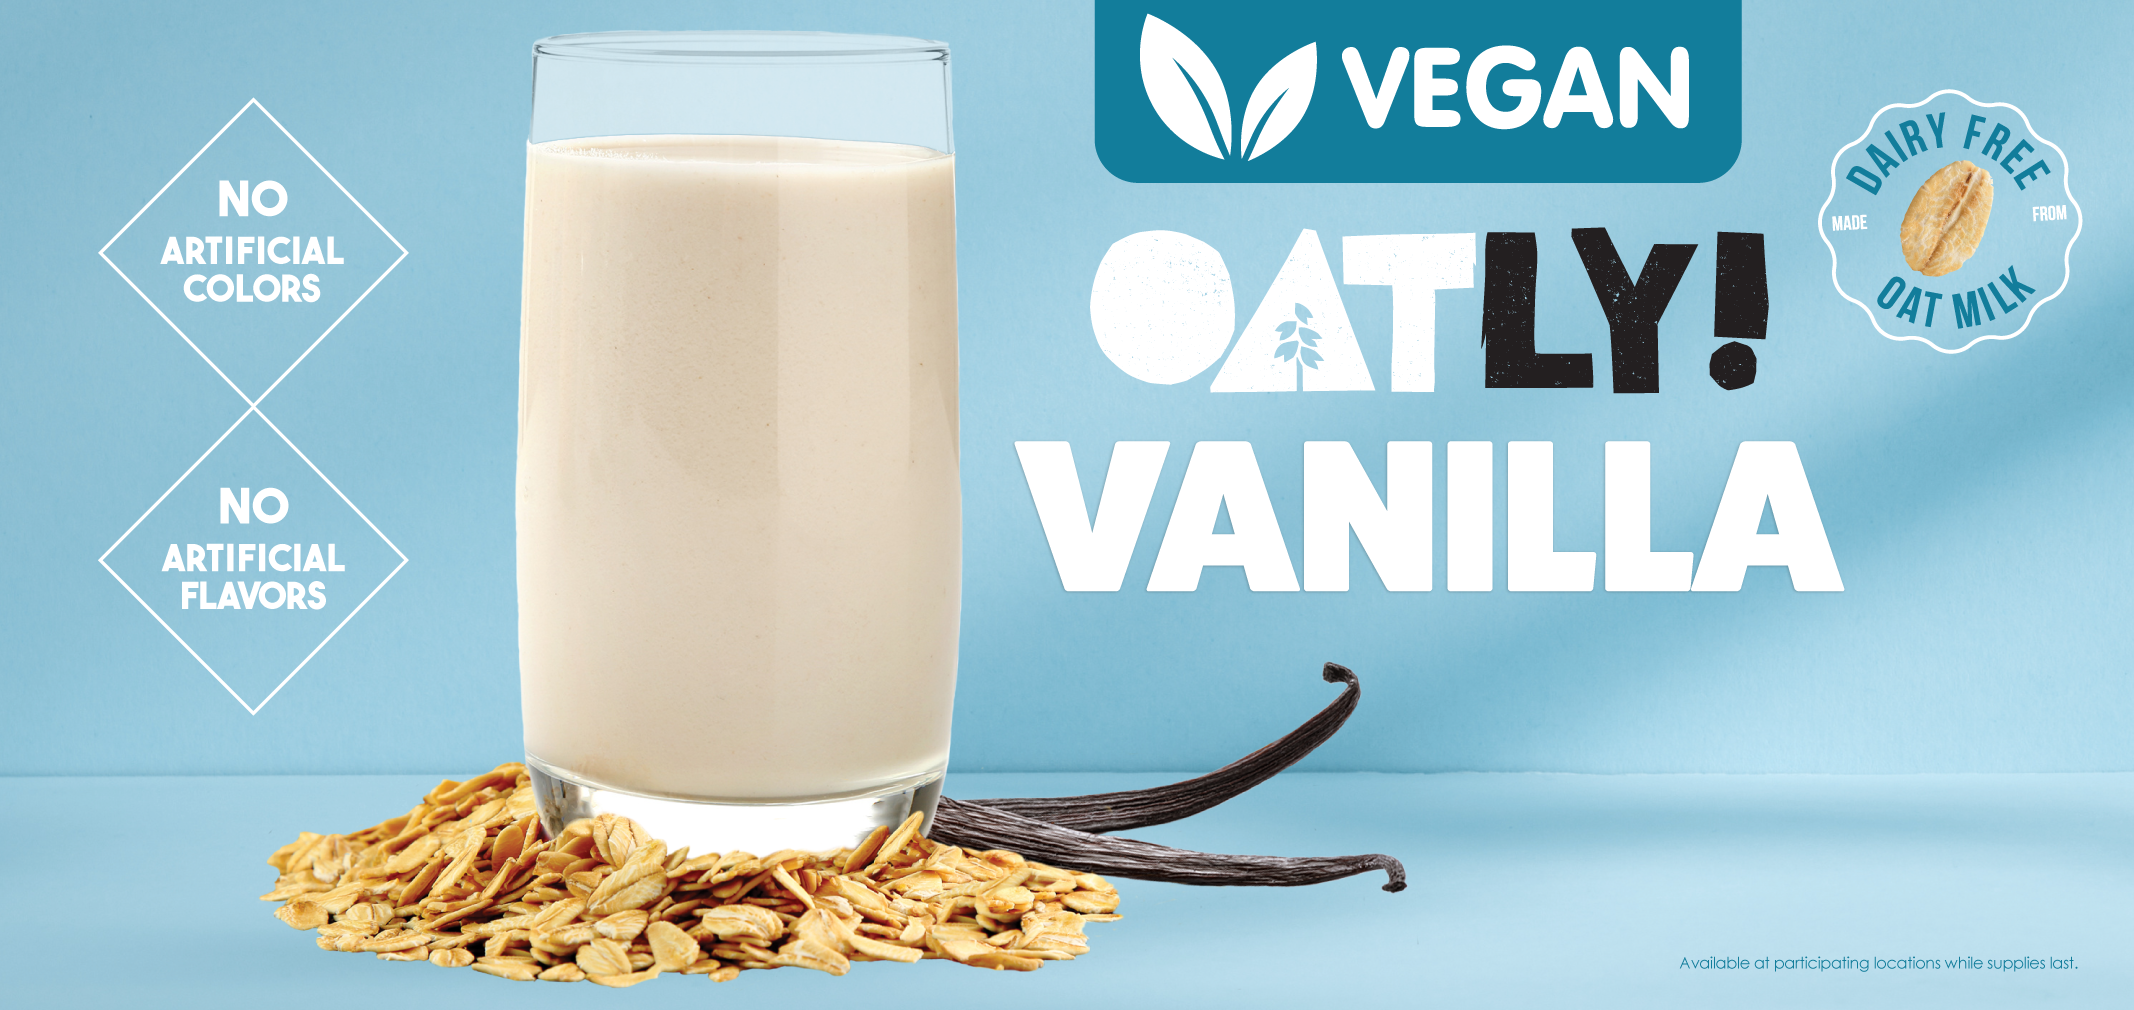 Vegan Oatly Vanilla label image